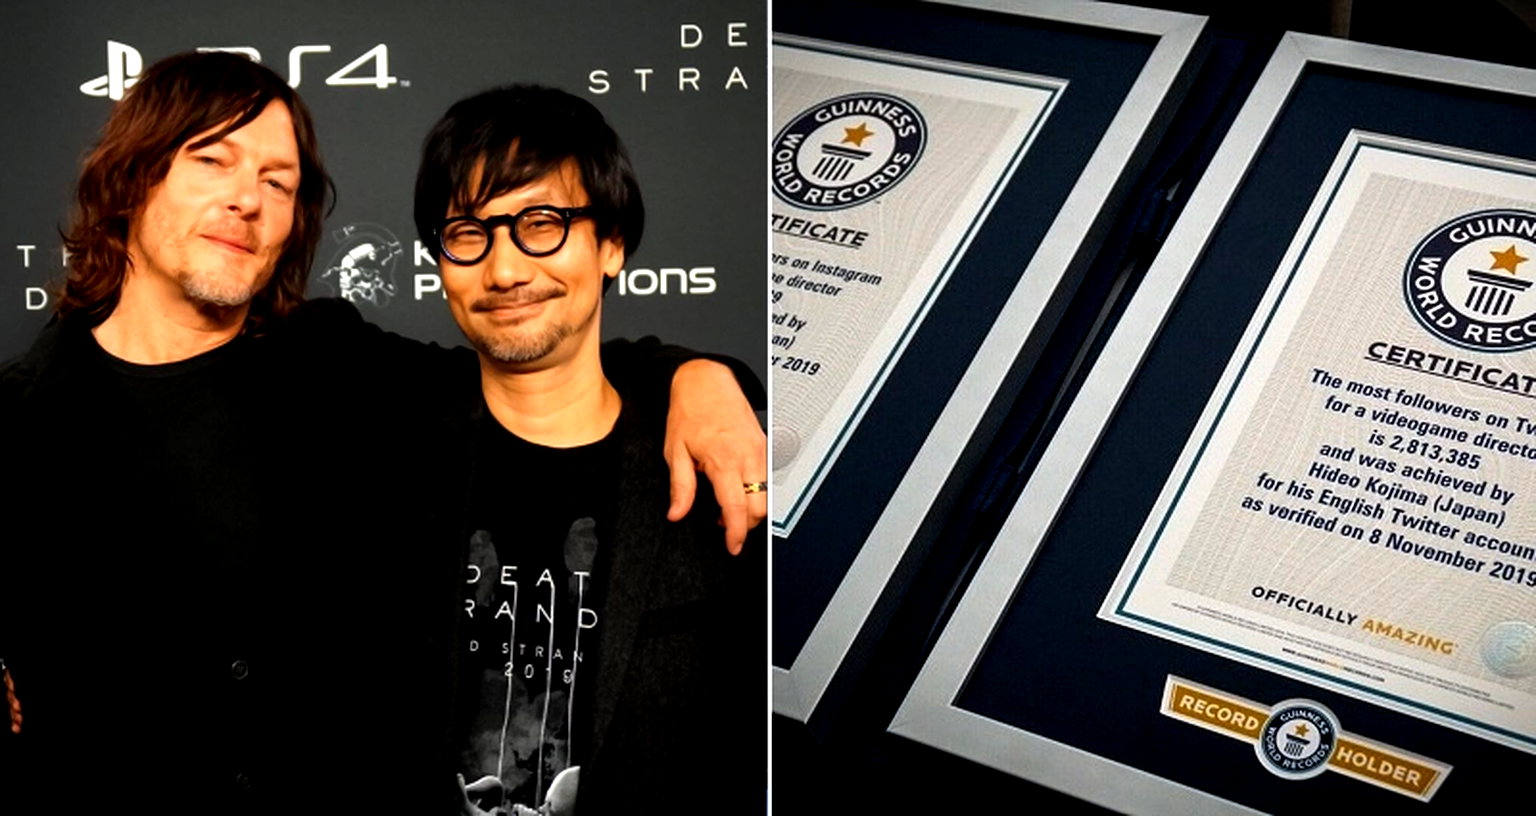 Death Stranding's Hideo Kojima wins Guinness World Record for social media  following - CNET